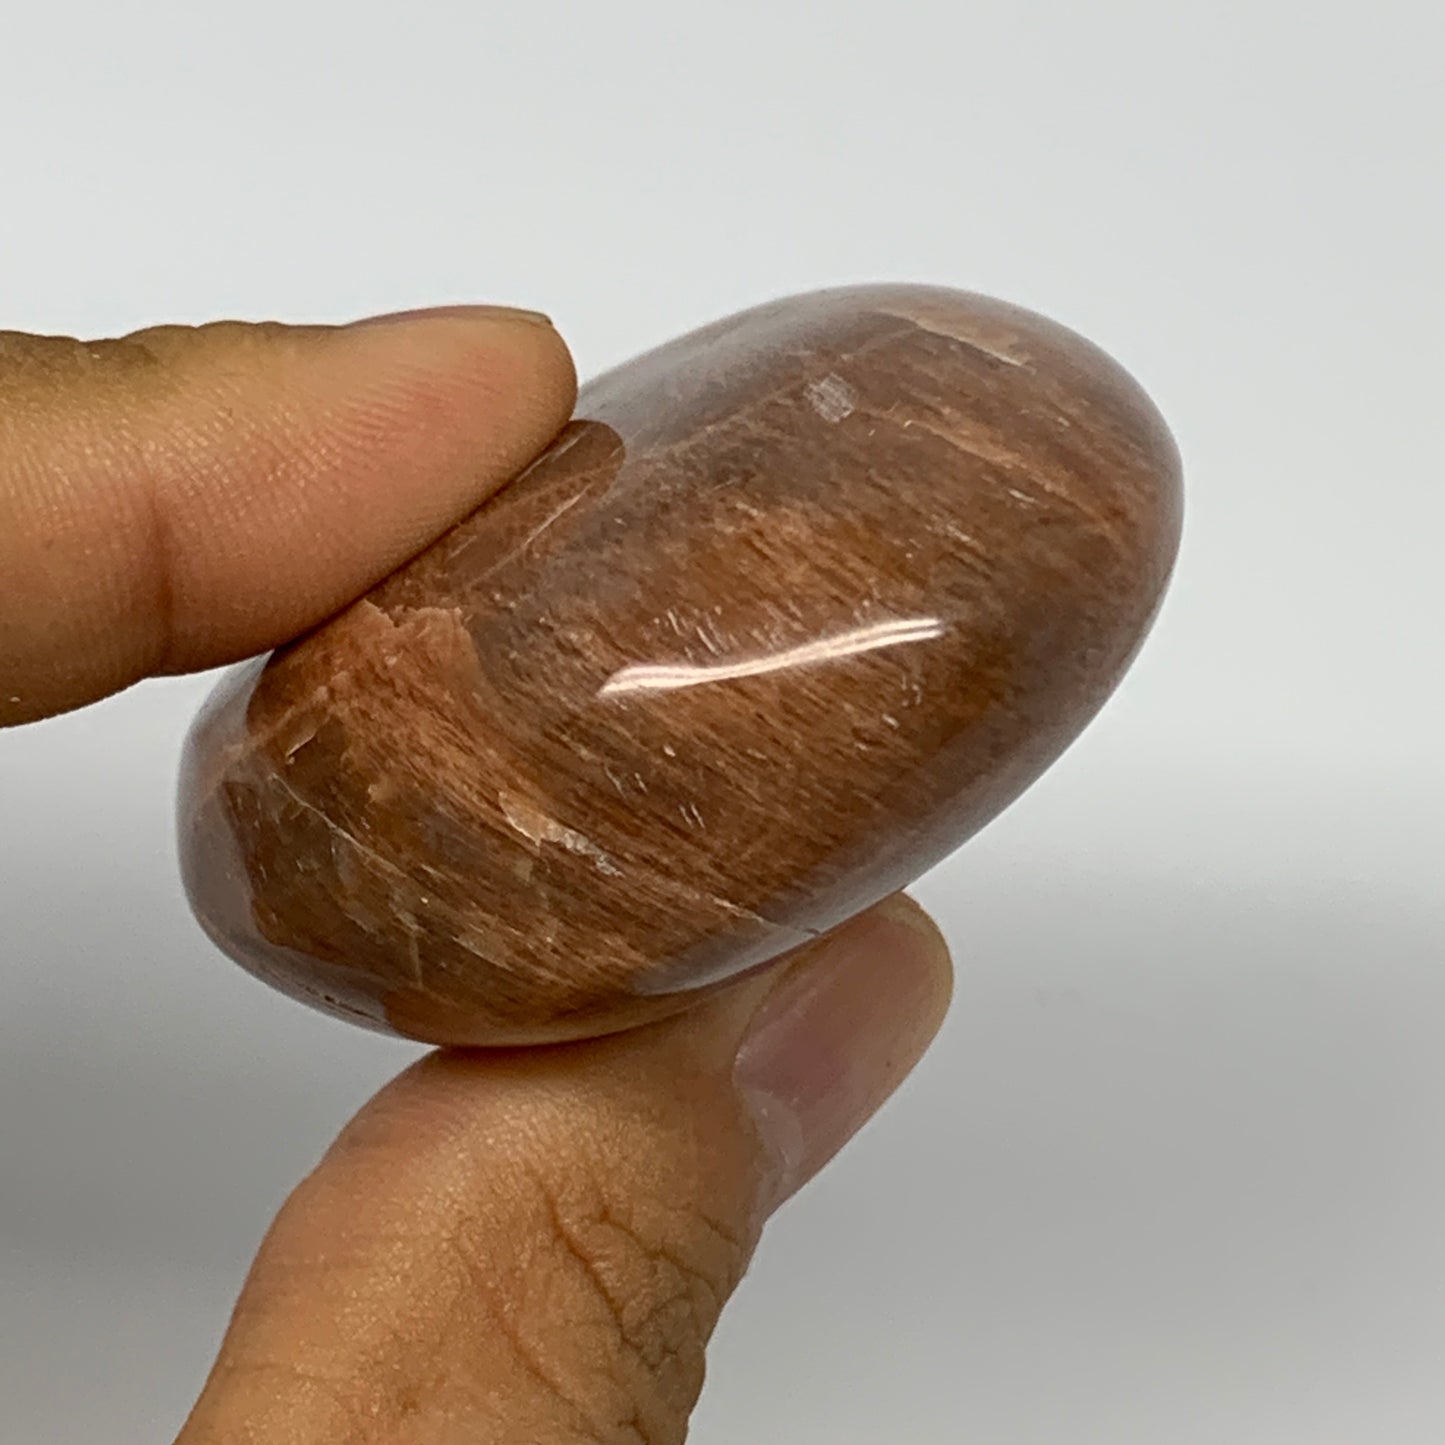 98.5g,2.4"x1.9"x1", Peach Moonstone Palm-Stone Polished Reiki Crystal, B15484